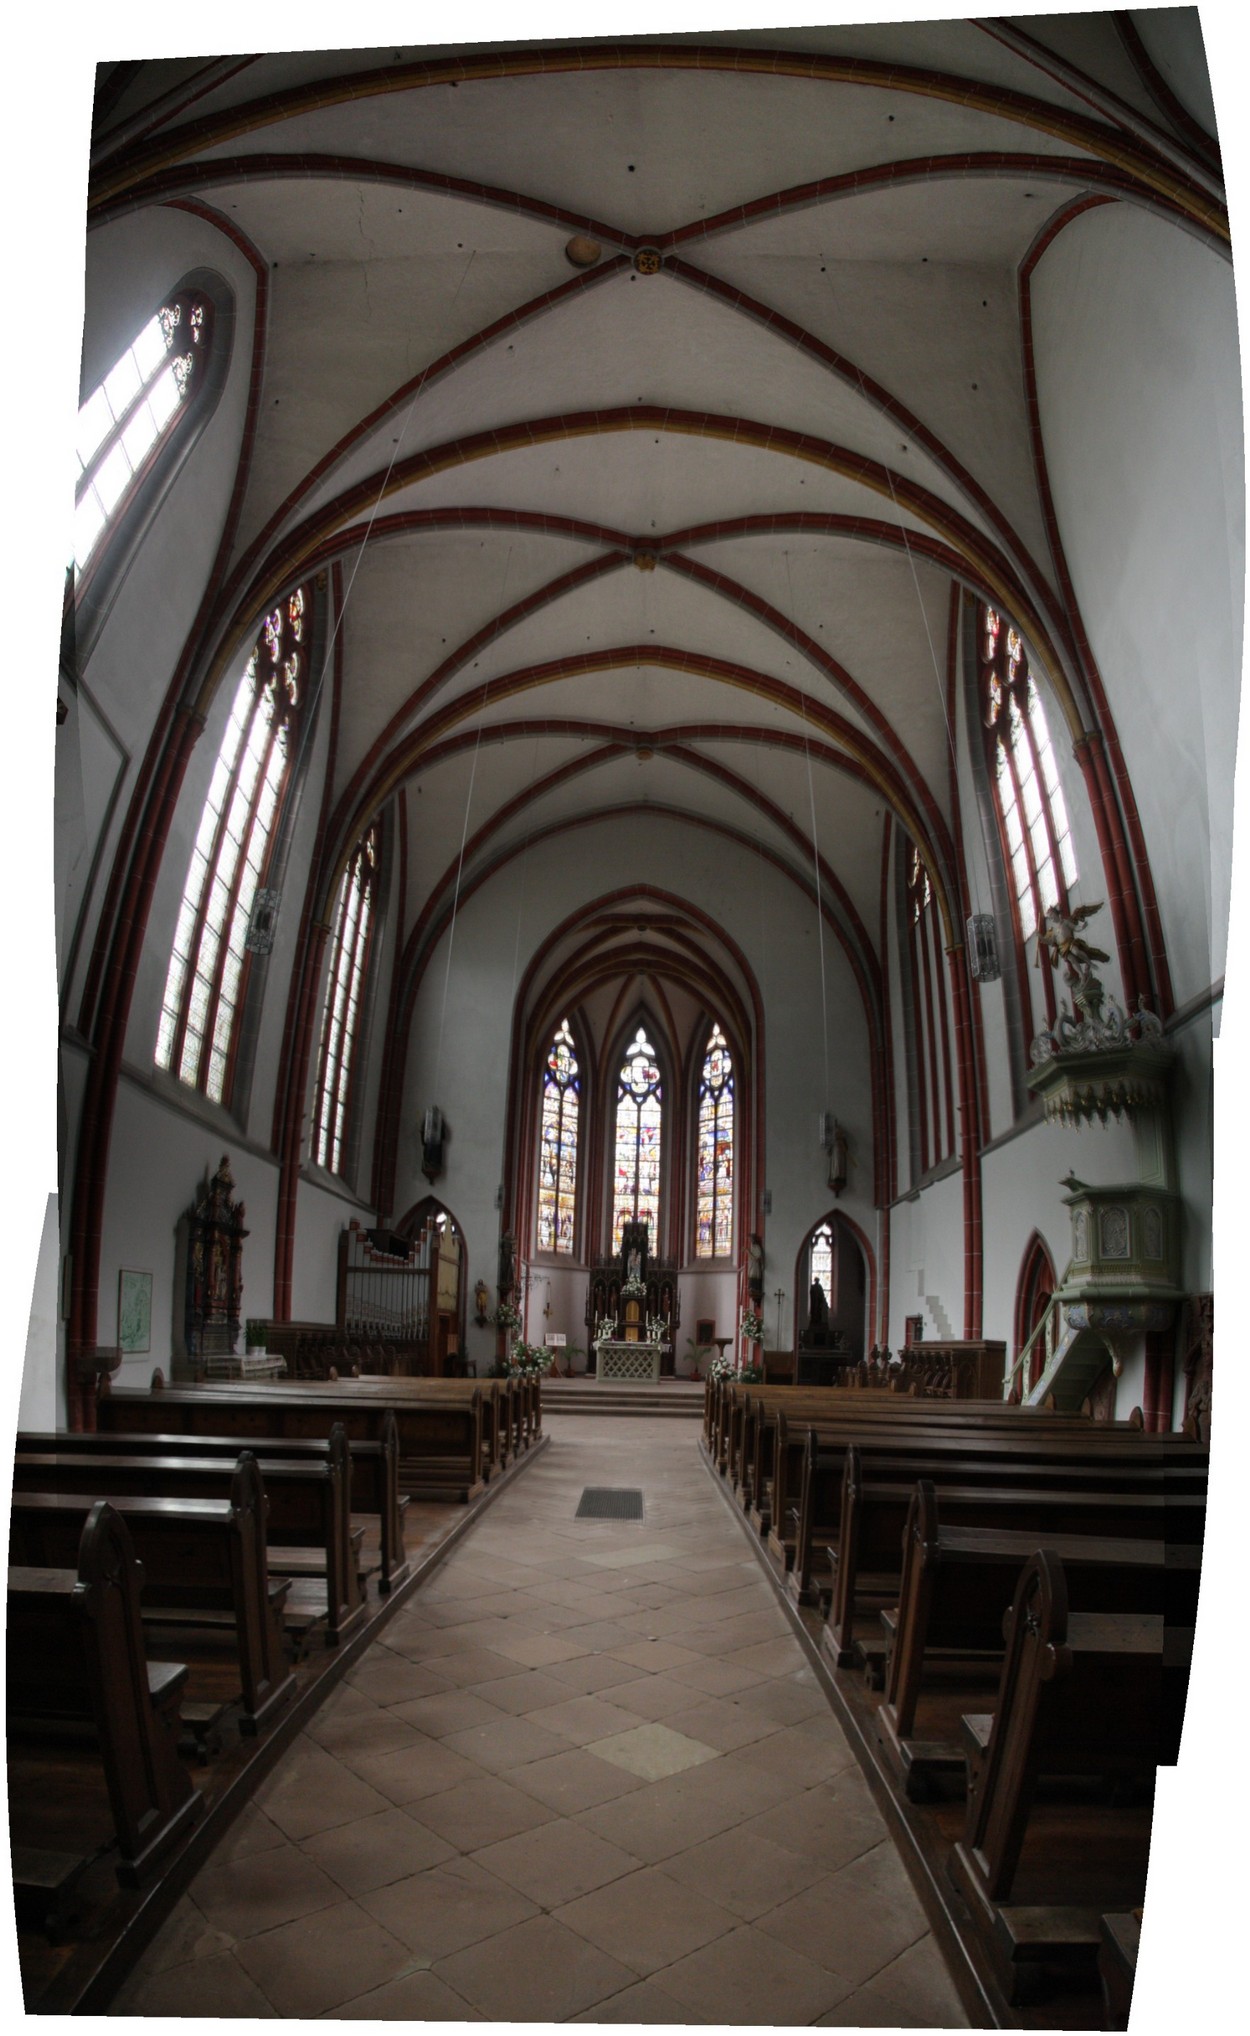 Kyllburg - Stiftskirche 